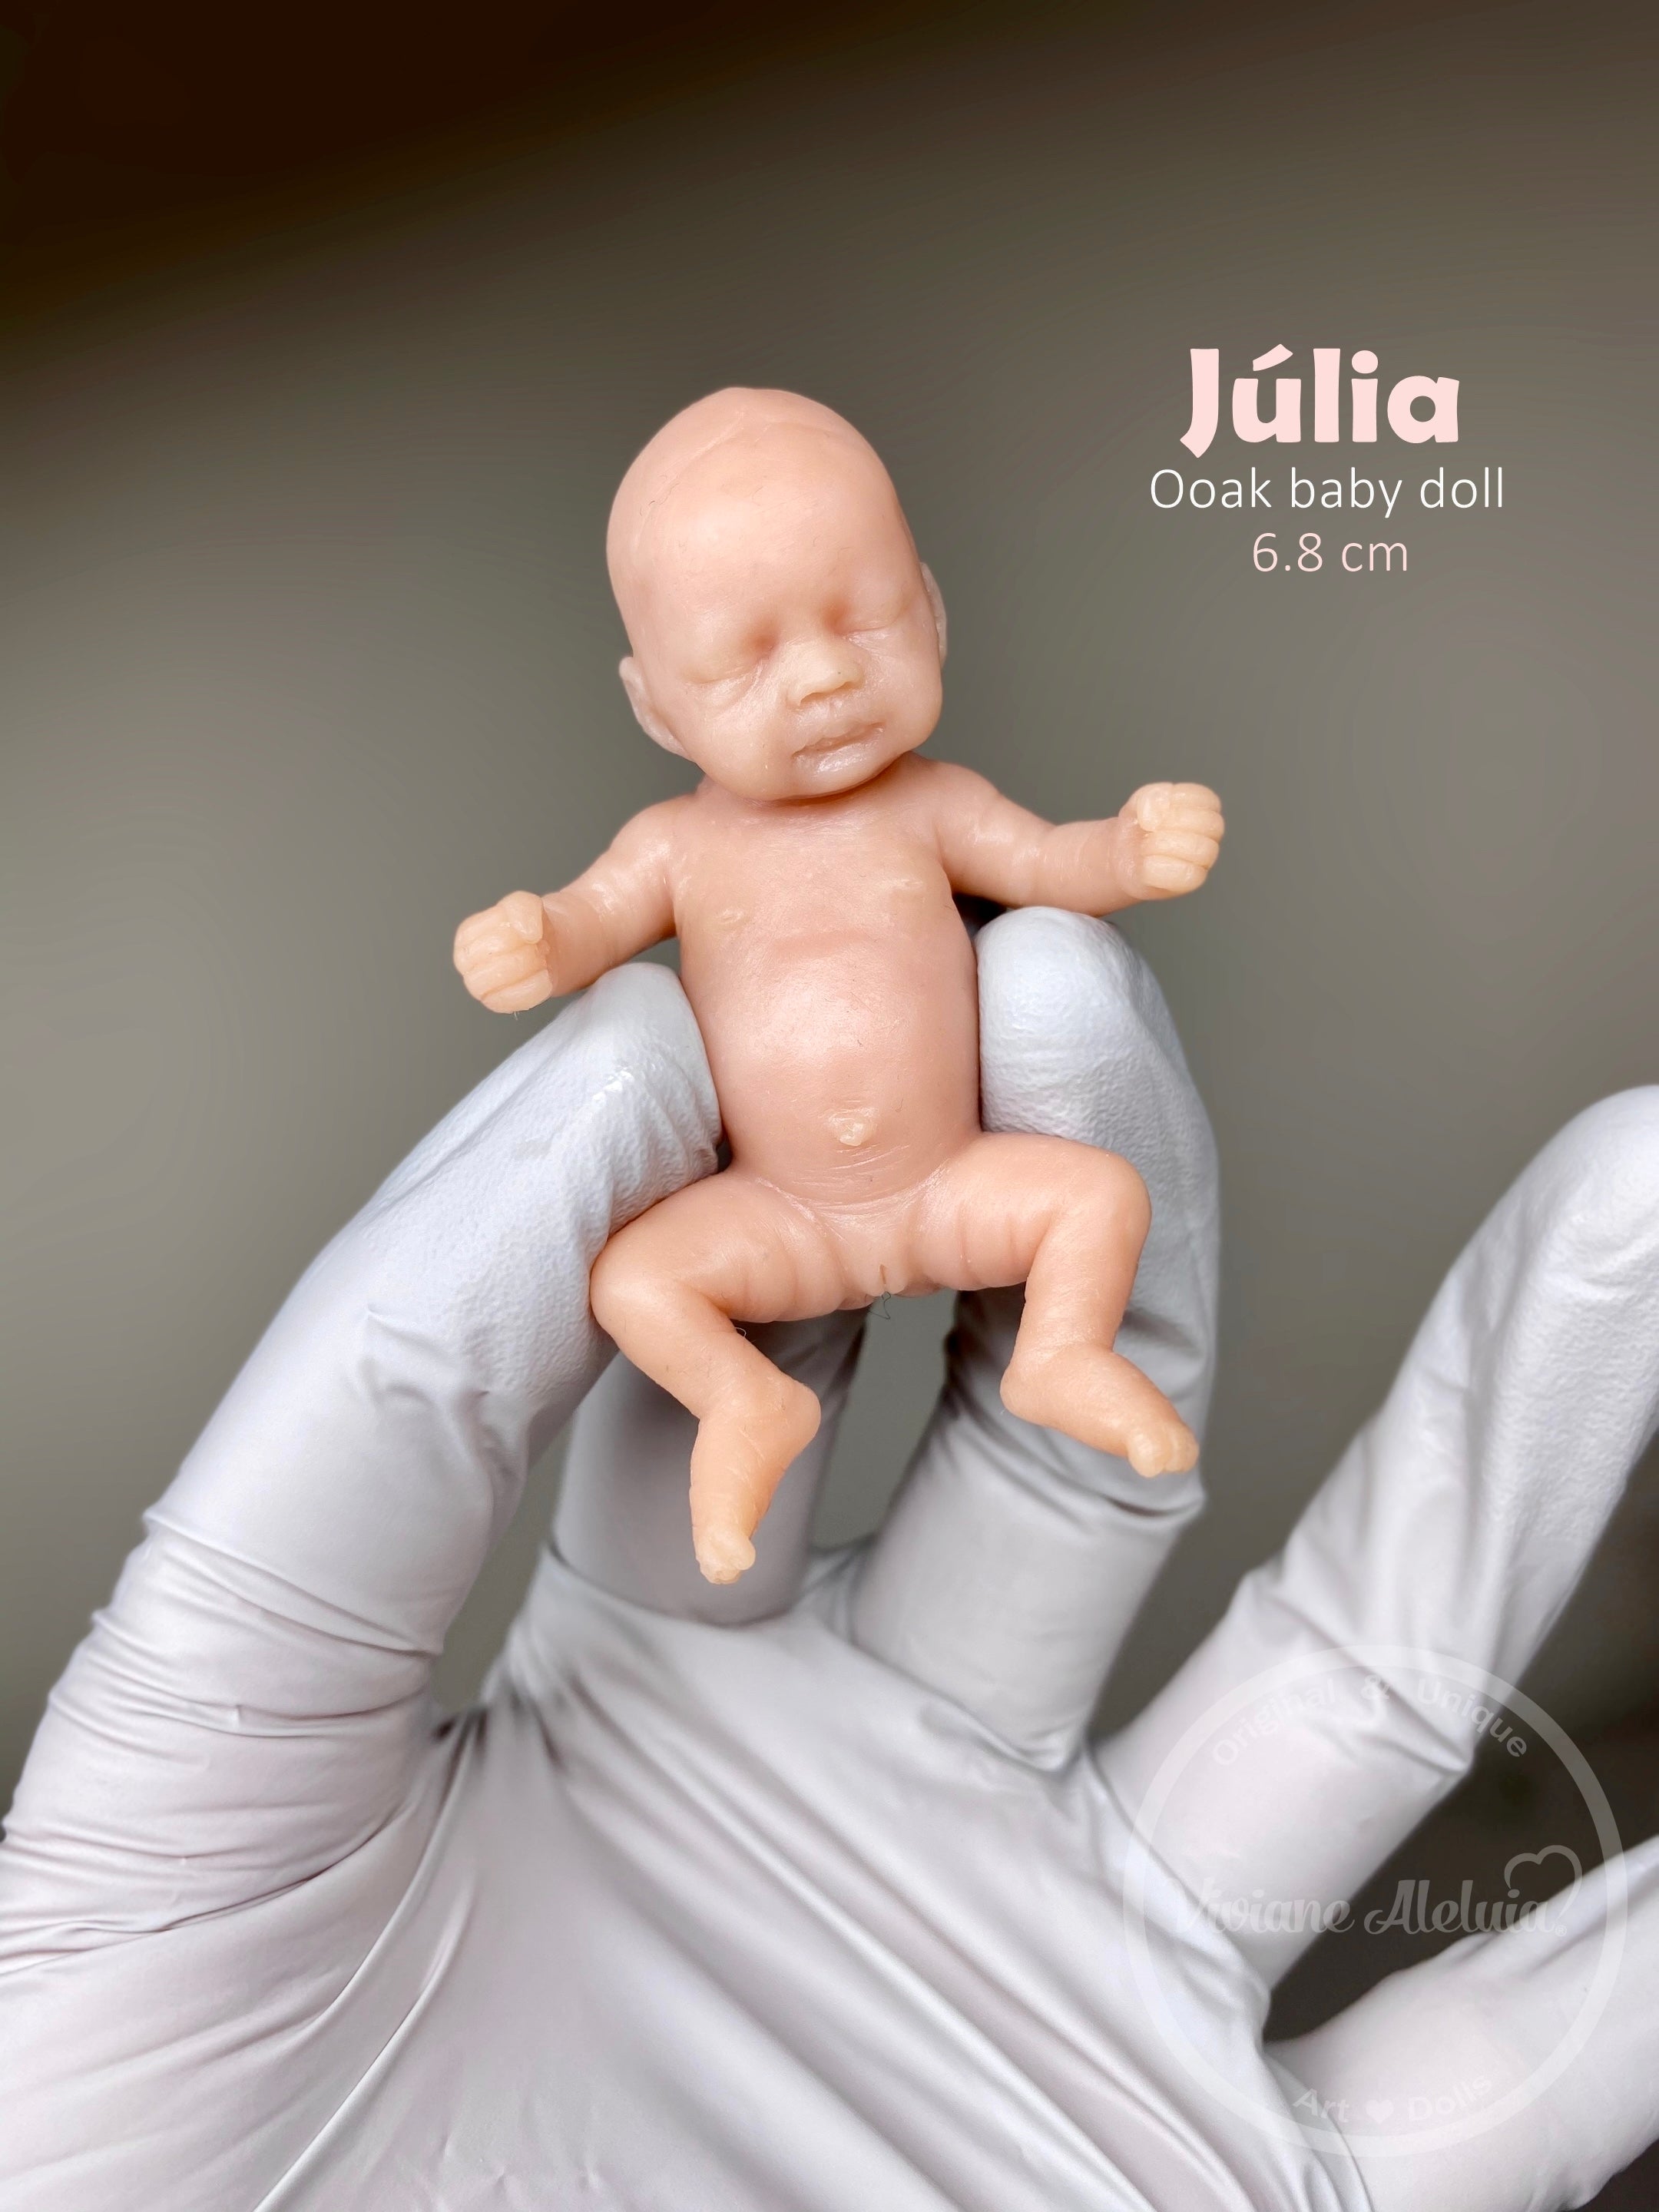 Julia Full Body Mini Silicone Baby by Viviane Aleluia